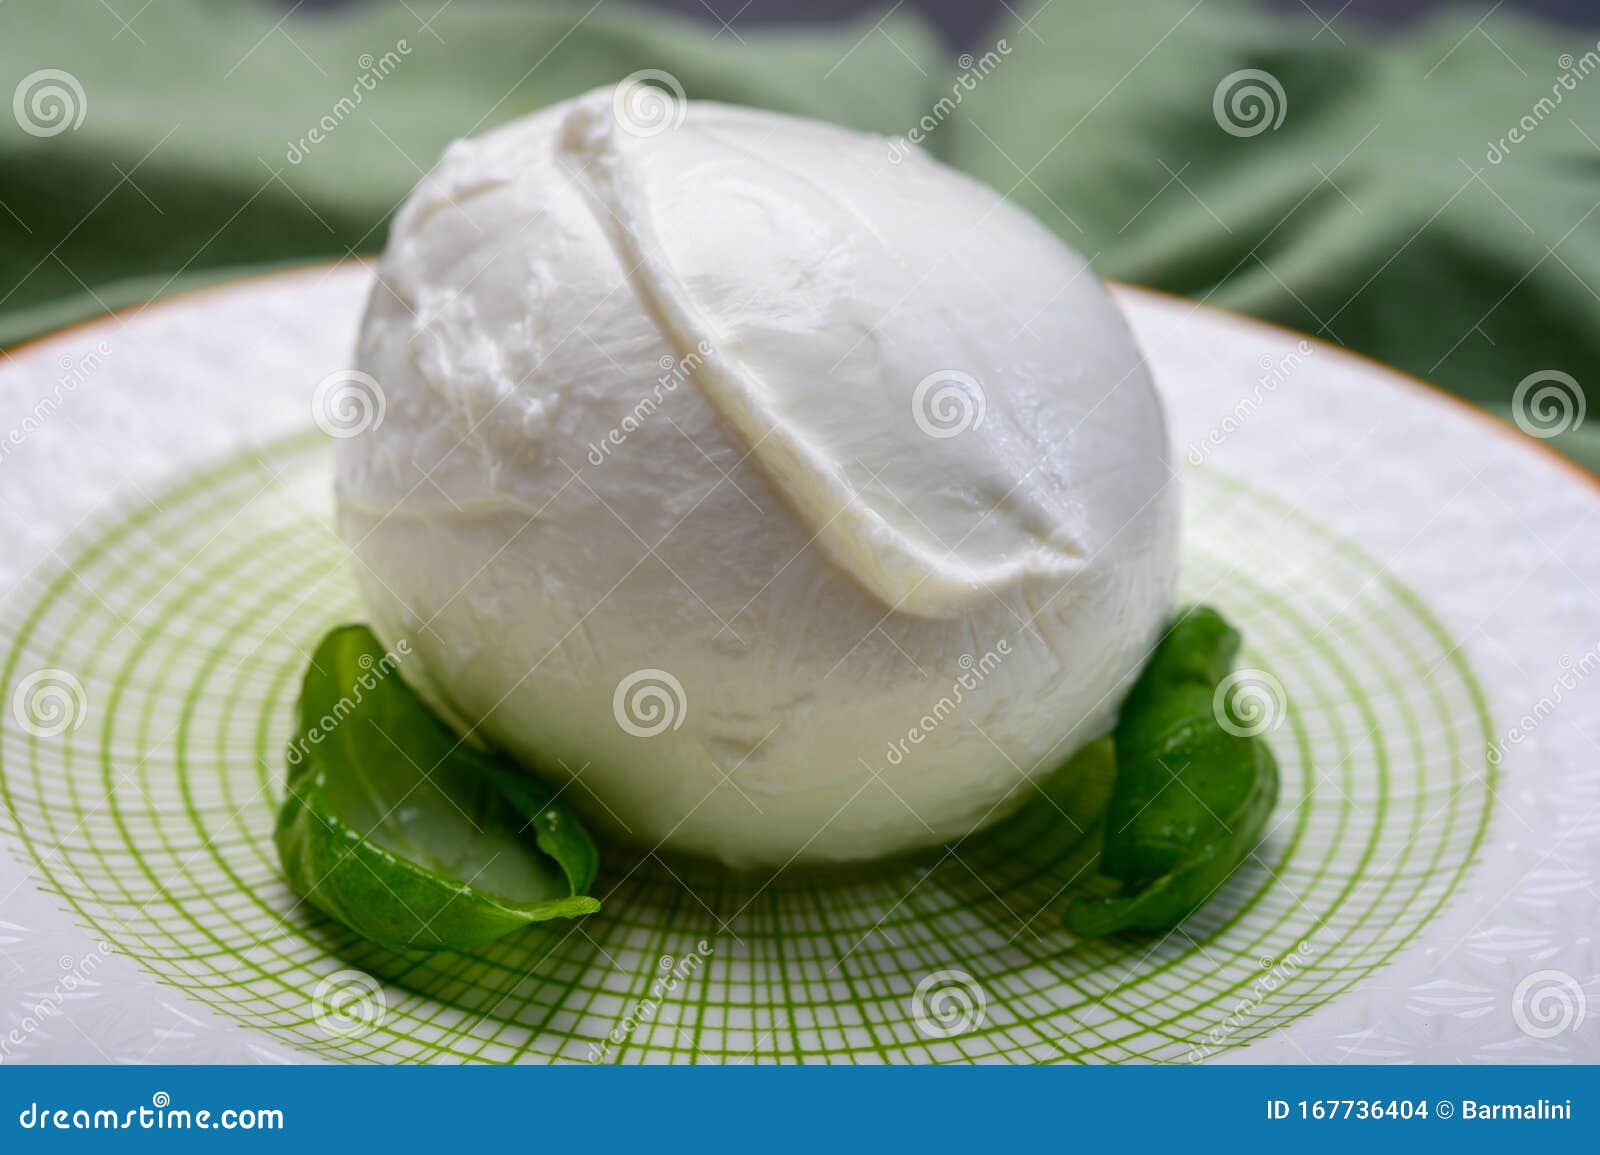 cheese collection, soft white italian mozzarella di bufala campana with fresh green basil leaves